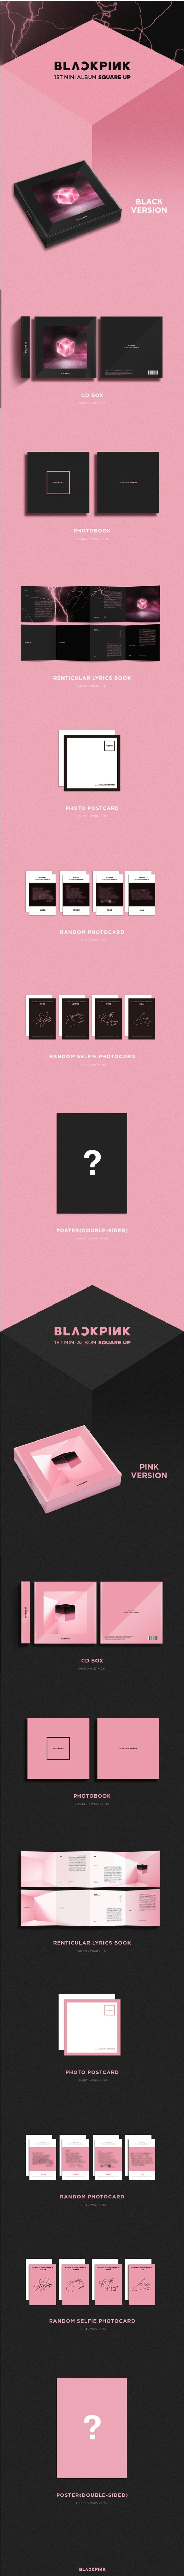 Korea Pop Store BLACKPINK - SQUARE UP (1ST MINI ALBUM) Kawaii Gifts 8809269509154